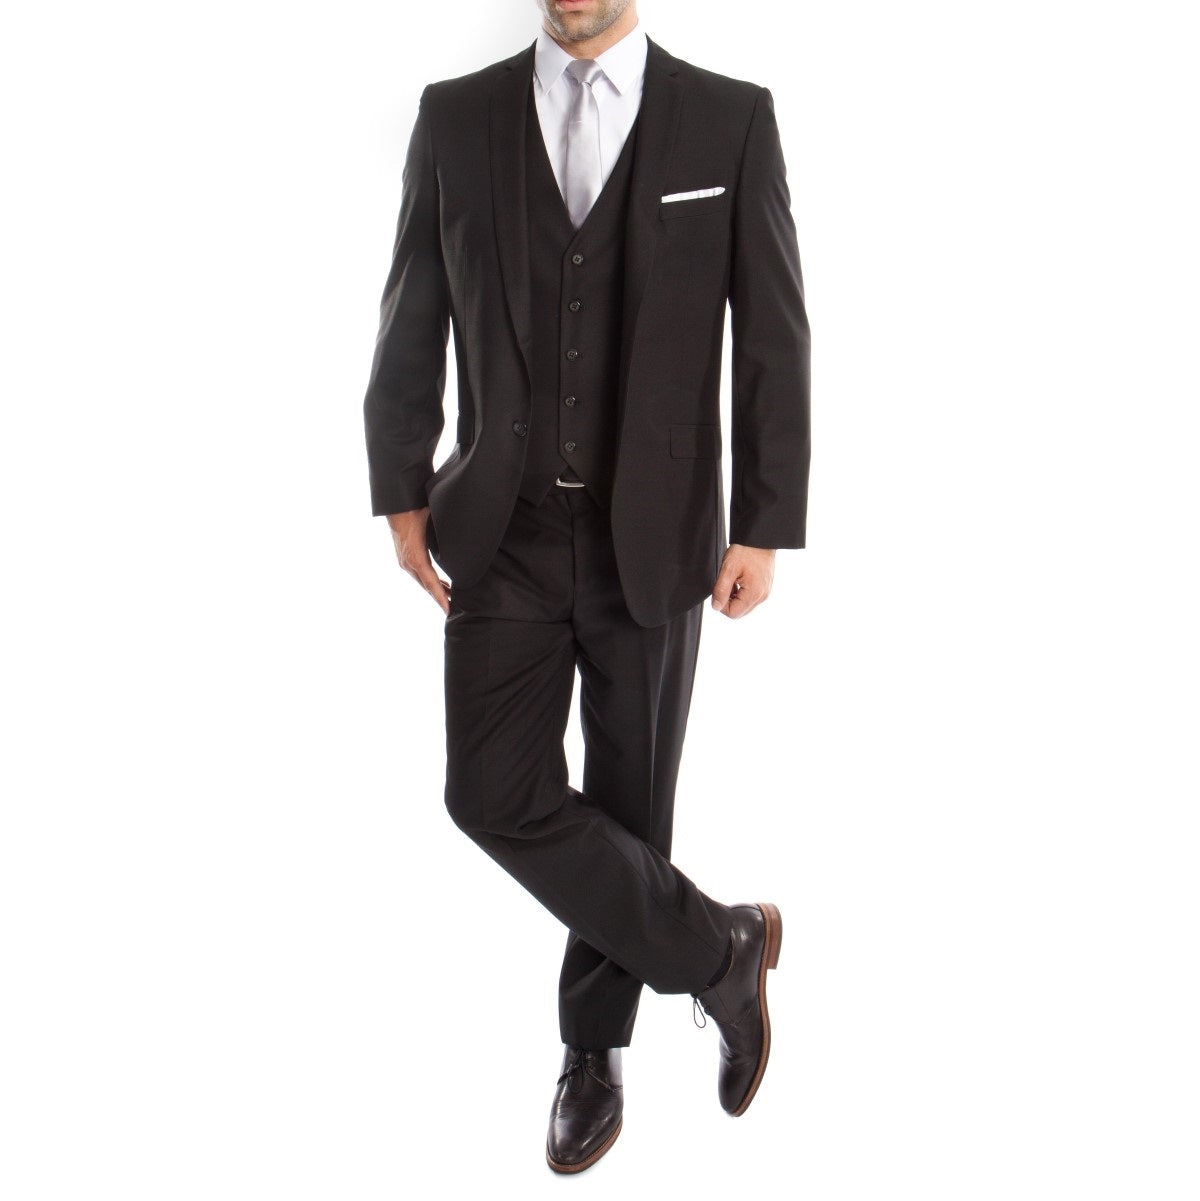 Traje Formal para Hombre TA-M154S-01 Black - Formal Suit for Men